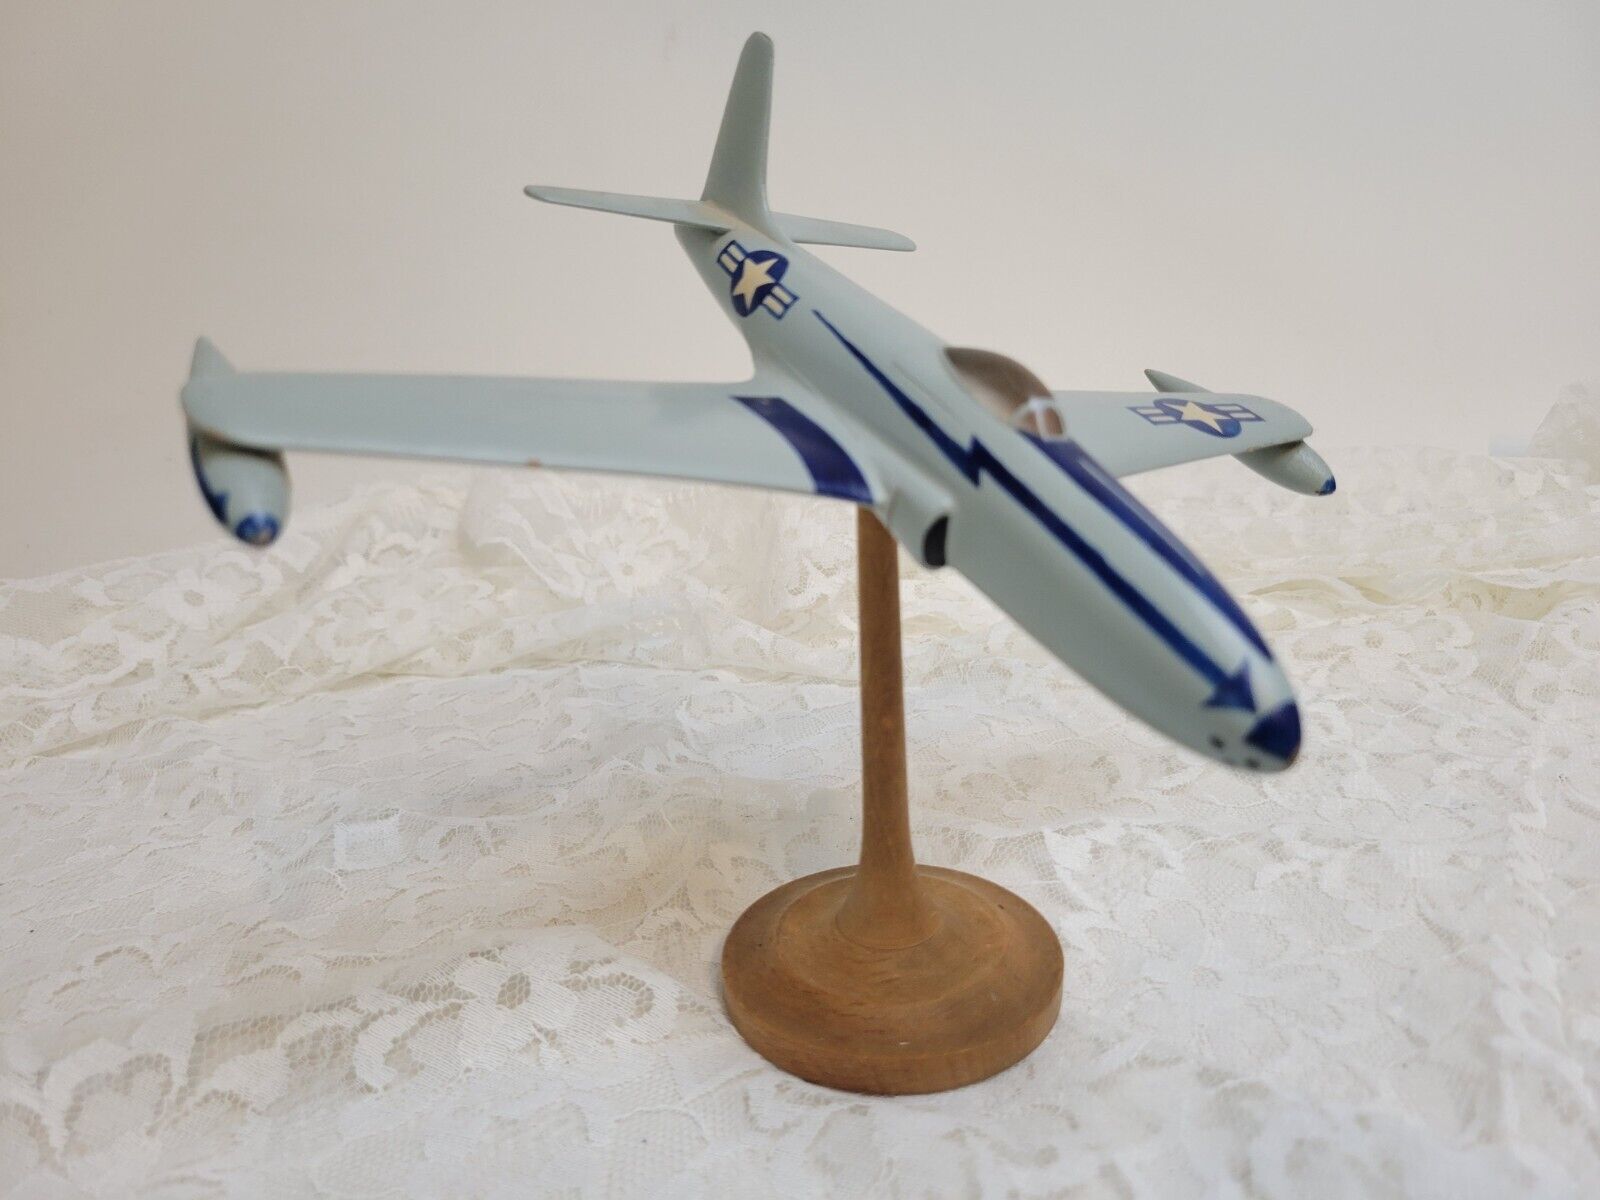 Vintage Plane Display Lockhead Shooting Star P80 1:64 Scale Desktop Decor Model